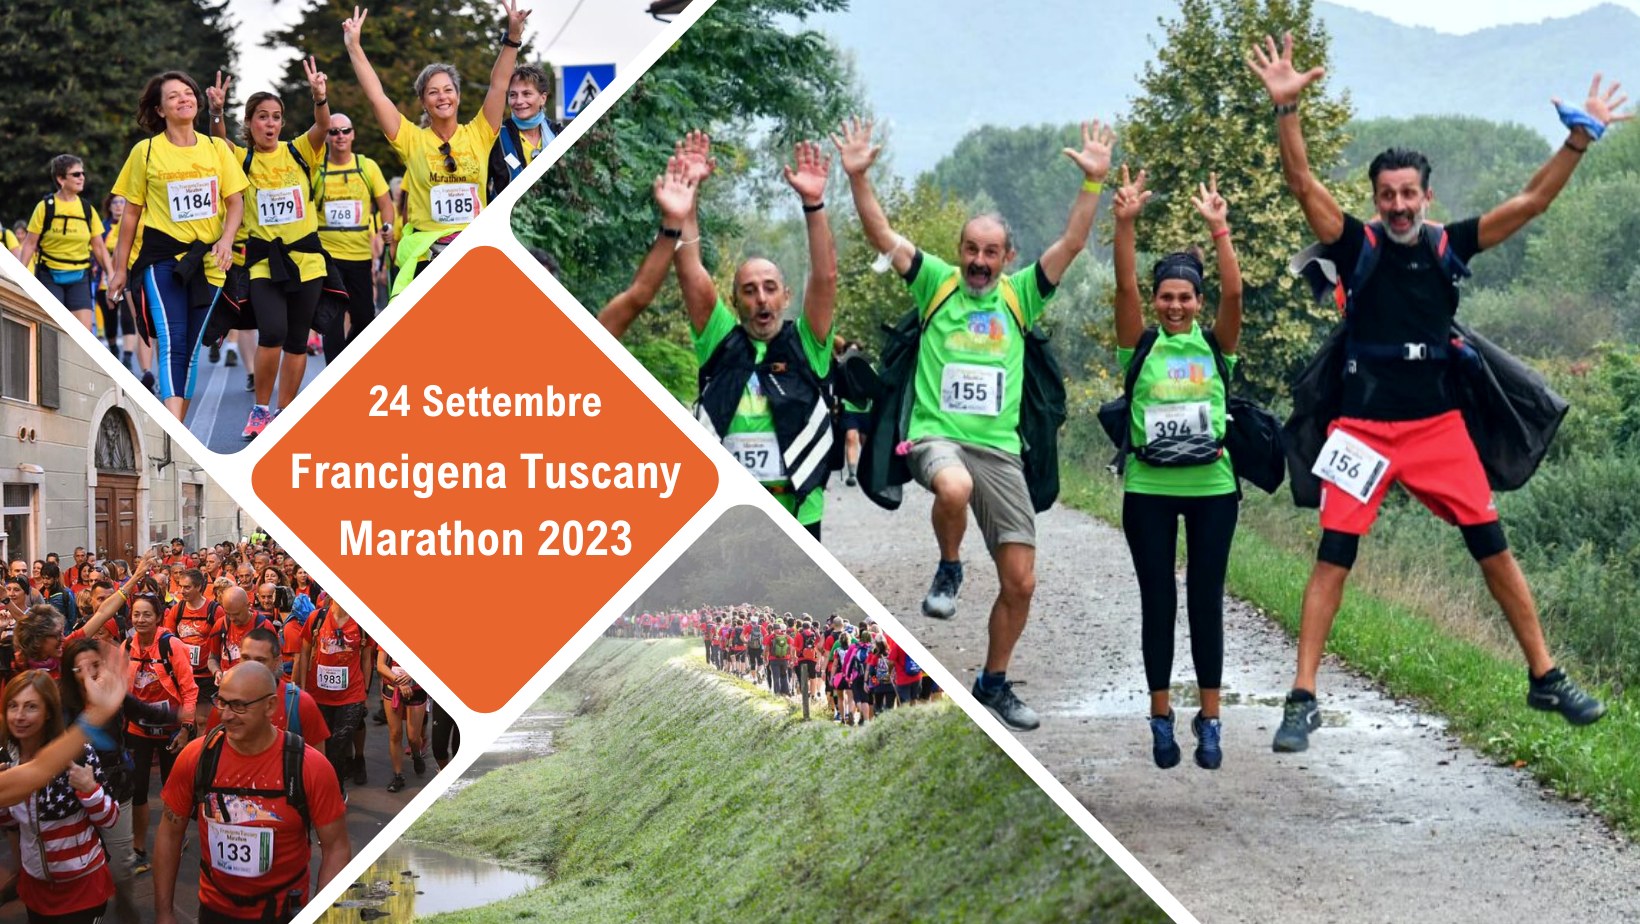 Francigena Tuscany Marathon 2023